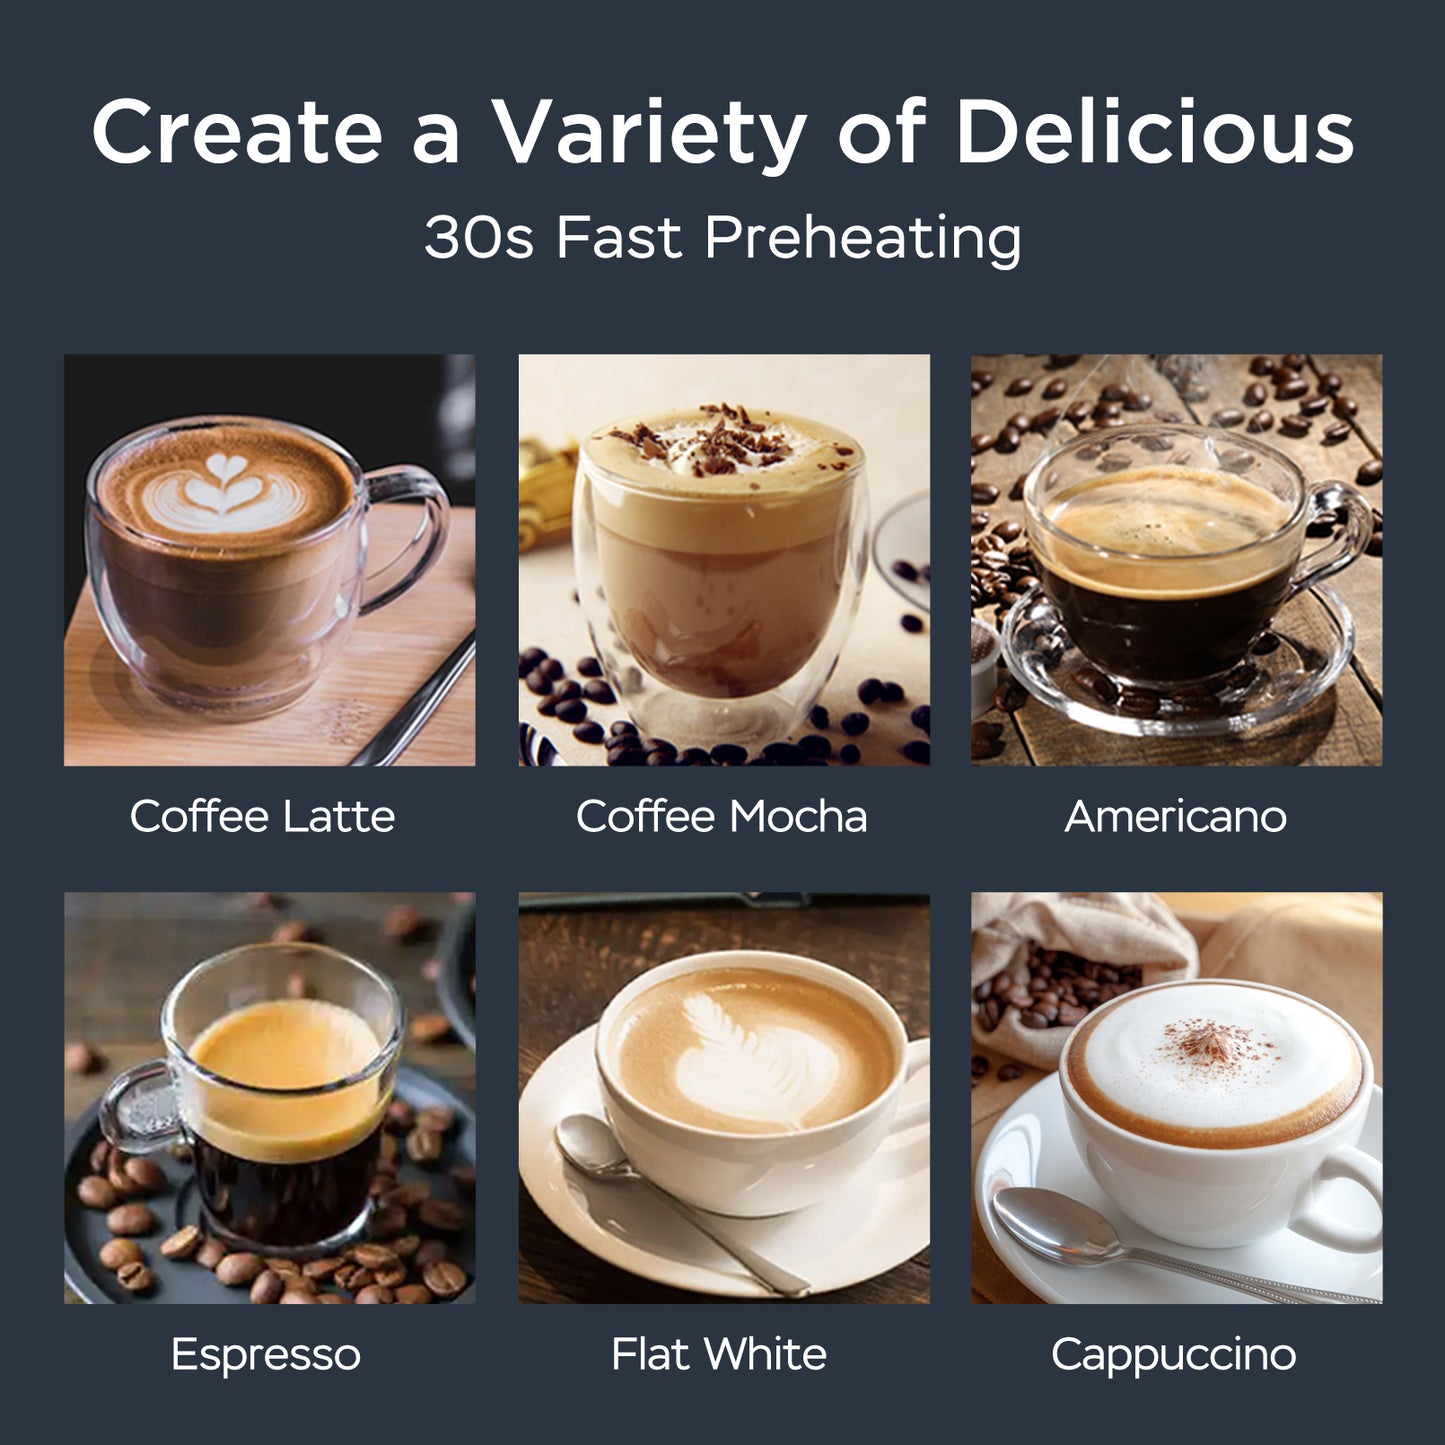 20 Bar Espresso Machine With Milk Frothier For Latte, Cappuccino